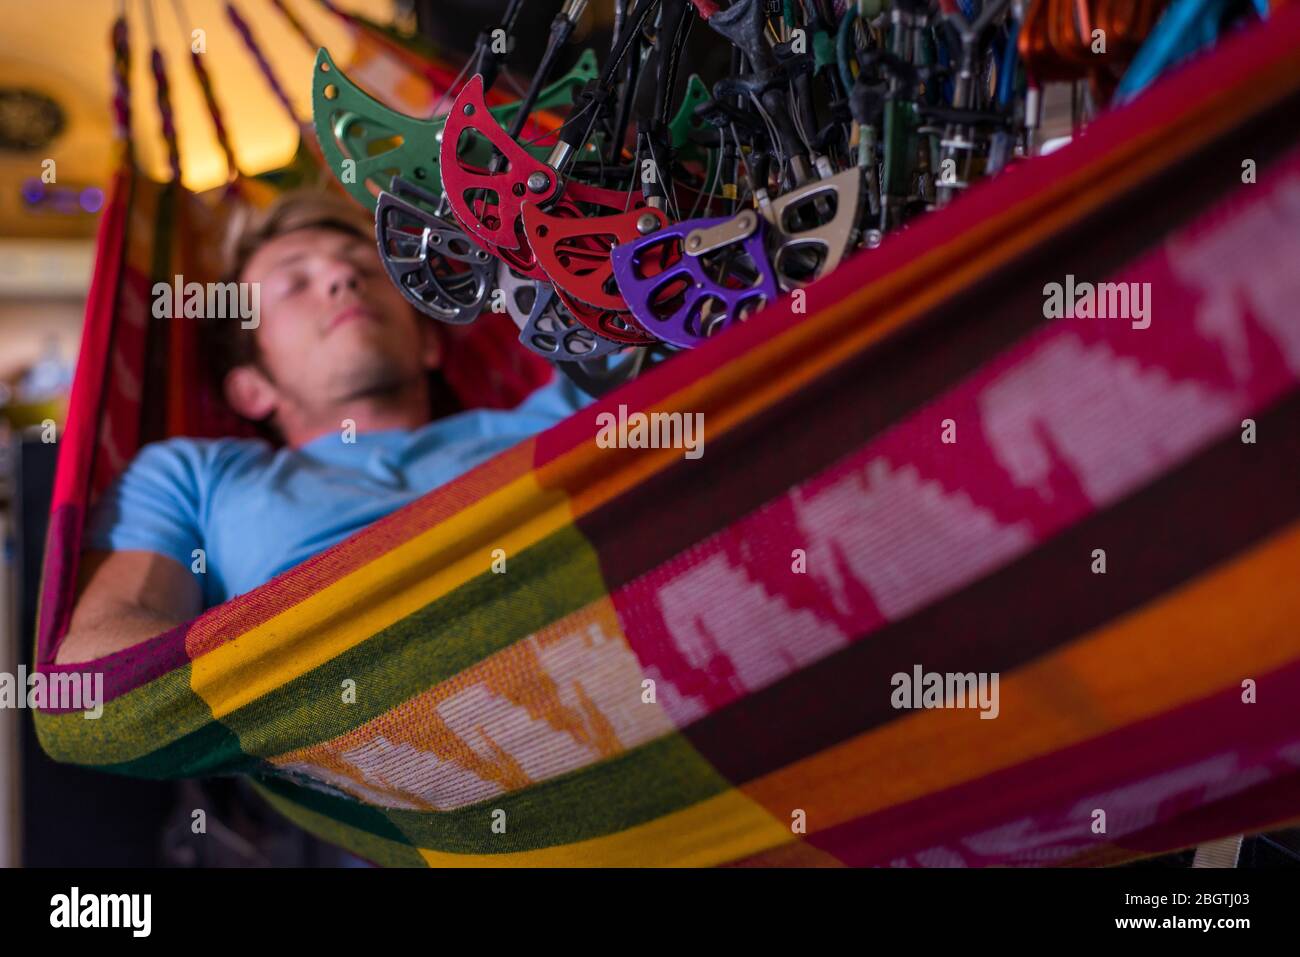 Man sleeping in hammock inside bus under lots of climbing gear hanging Stock Photo